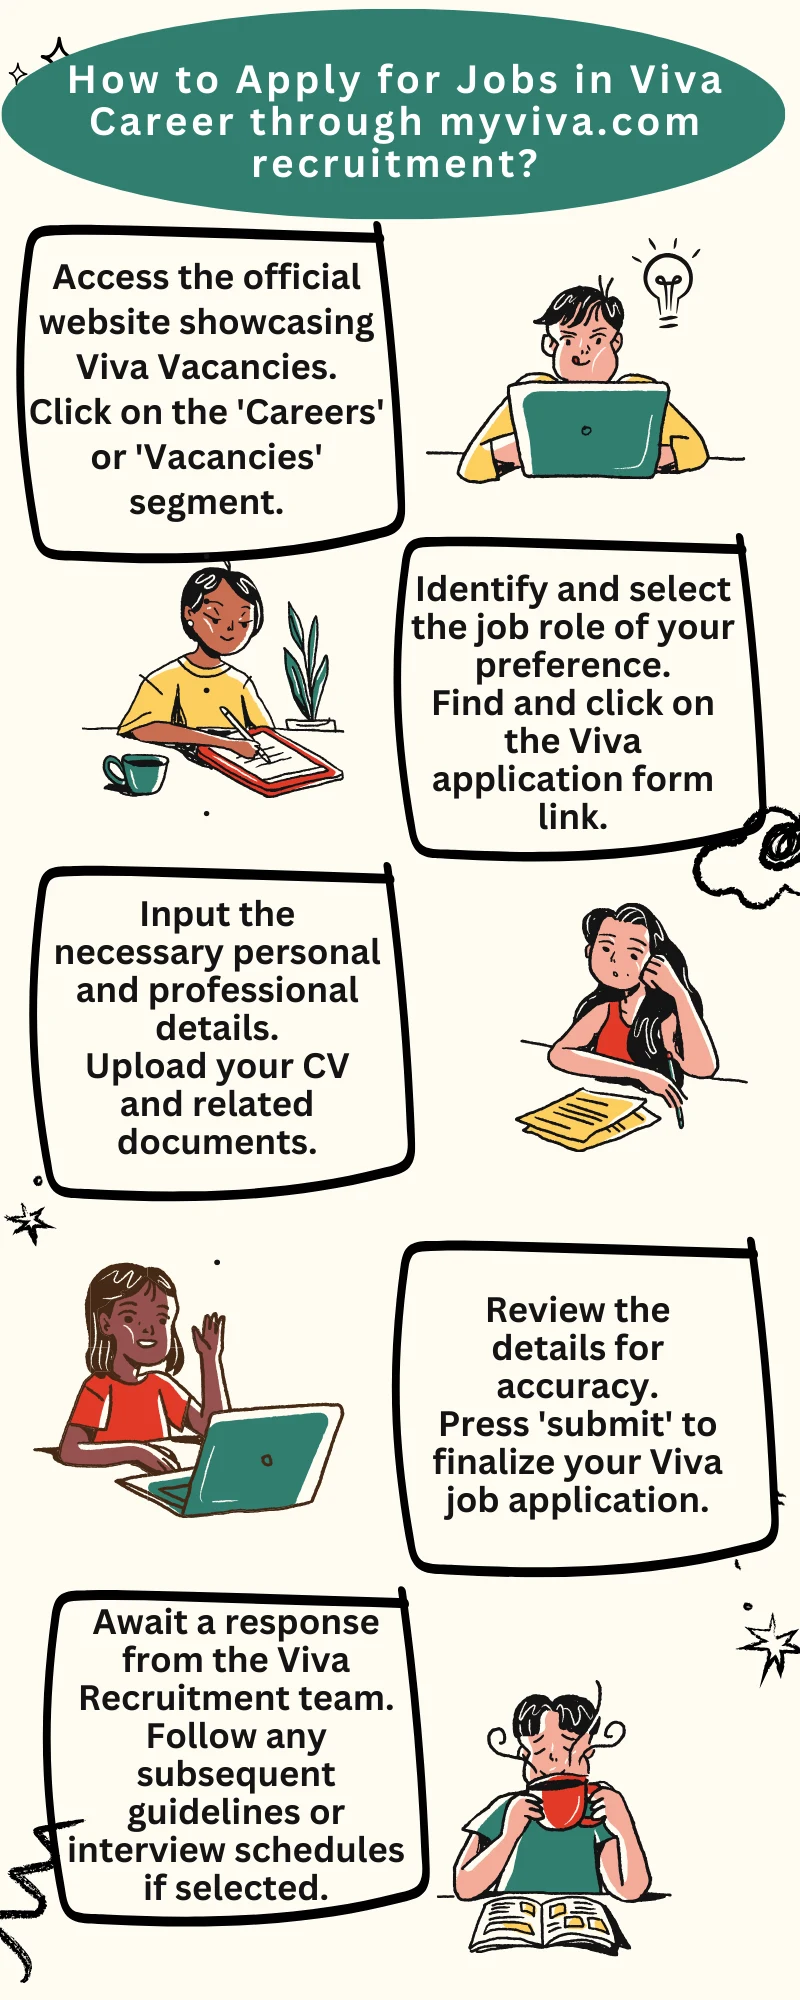 How to Apply for Jobs in Viva Career through myviva.com recruitment?